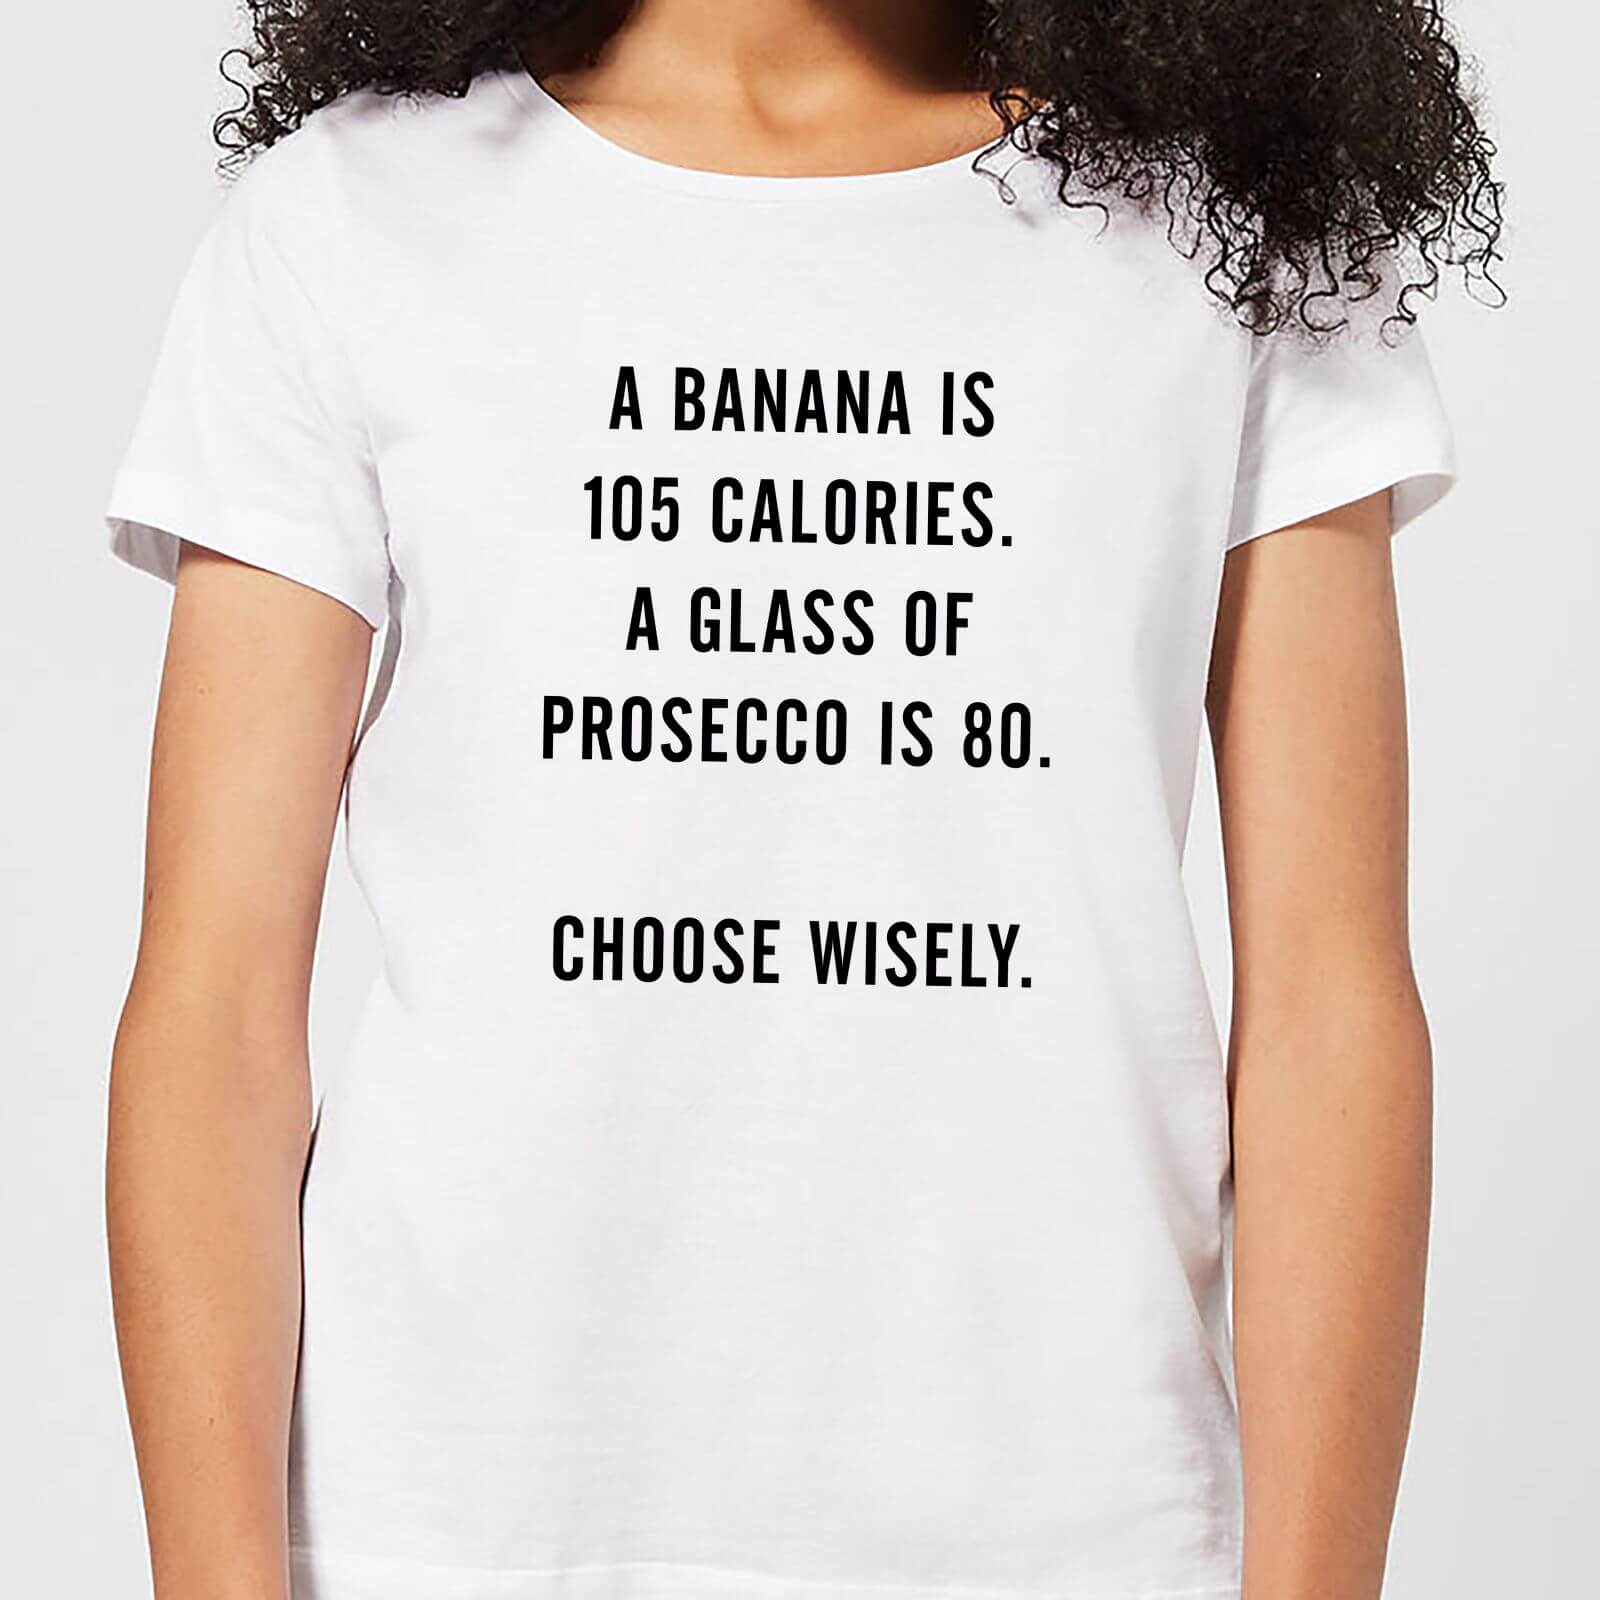 A Banana Is 105 Calories Womens T-Shirt - White - XXL - White